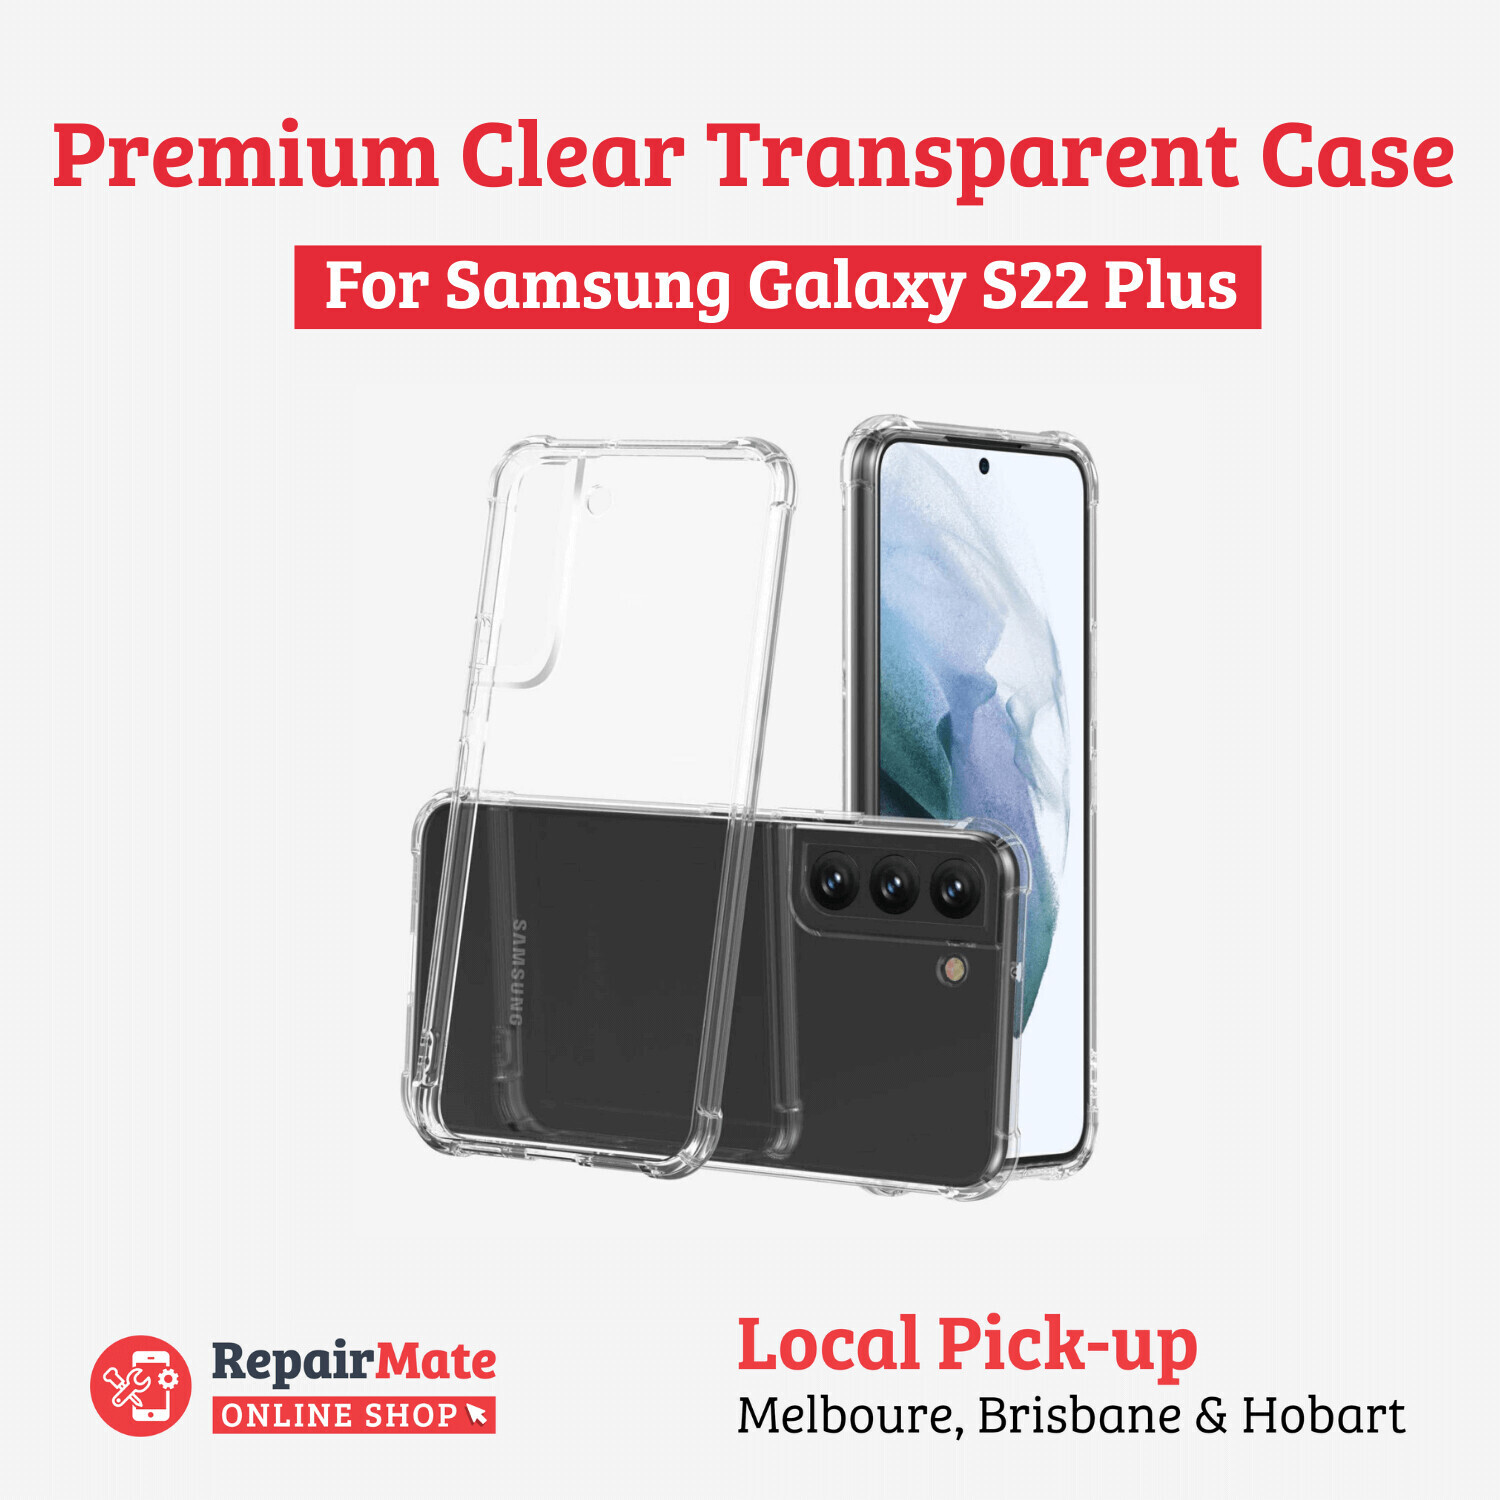 Samsung Galaxy S22 Plus Premium Clear Transparent Case Cover